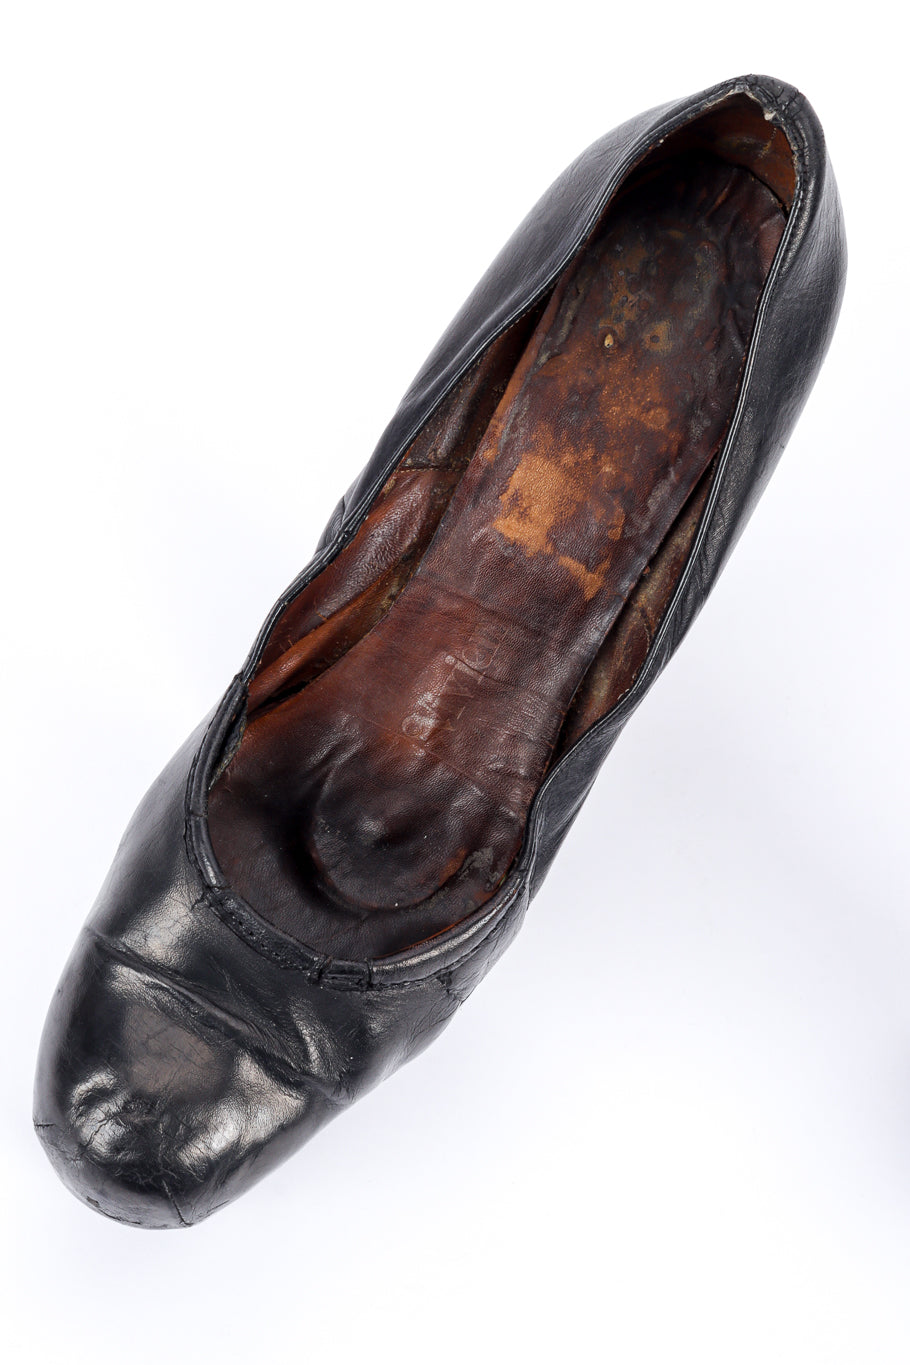 Vintage Vivienne Westwood 1993 F/W Super Elevated Leather Court Shoe left shoe top view of damaged inner sole @recessla